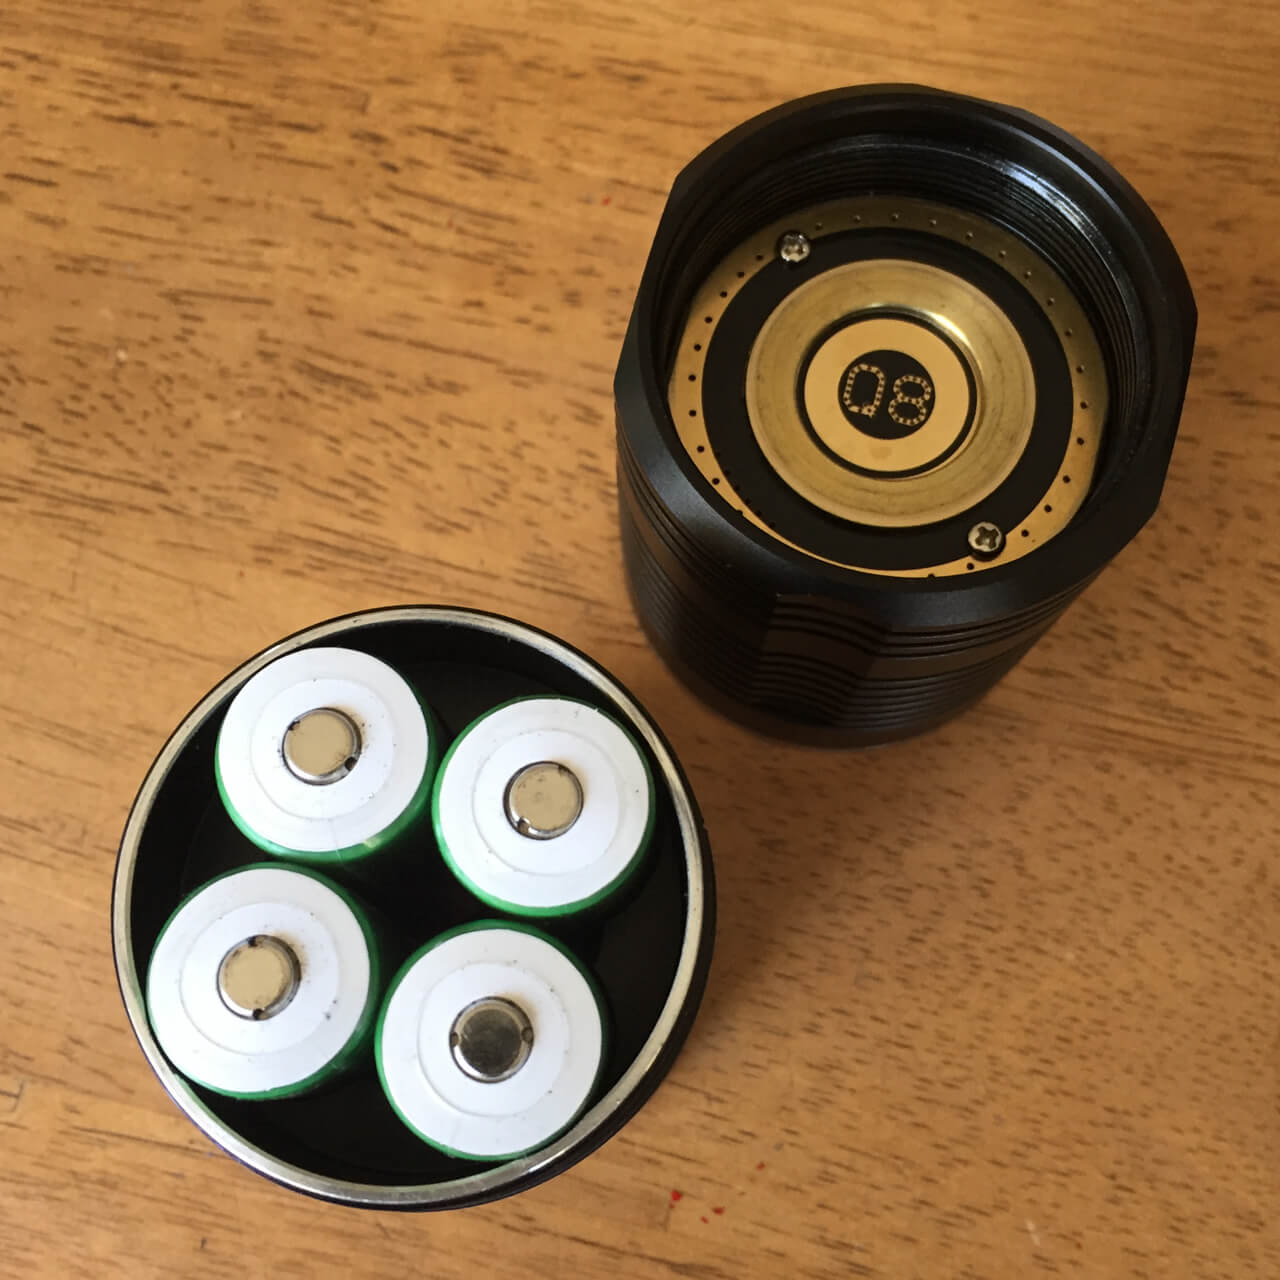 Button top unprotected batteries